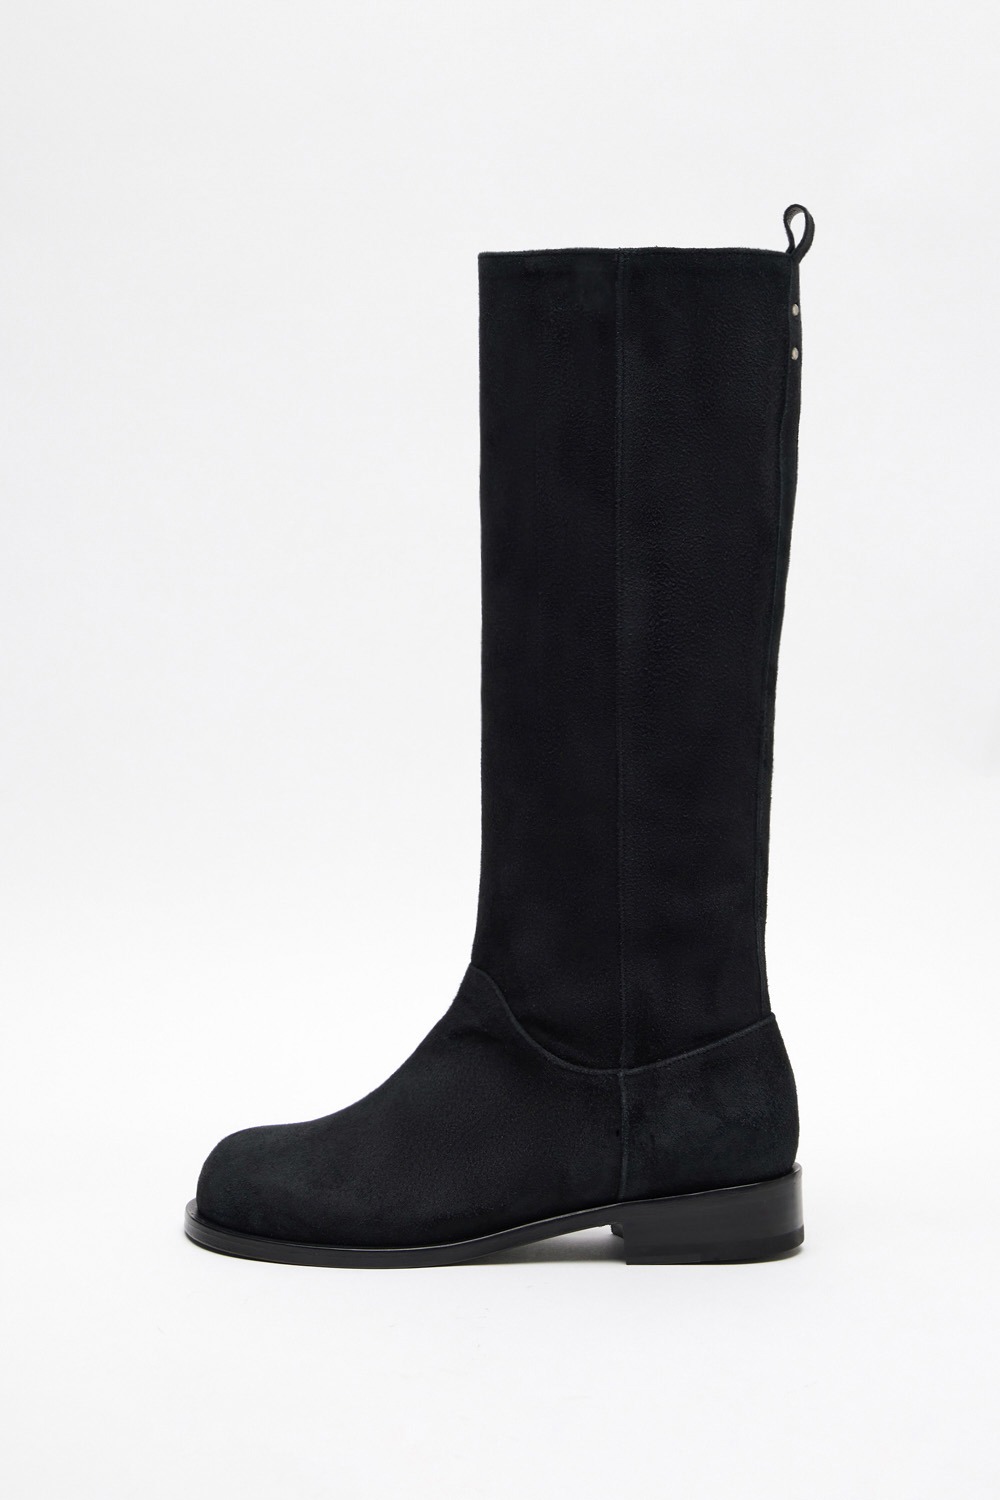 Knee-High Suede Boots (Women) - Black